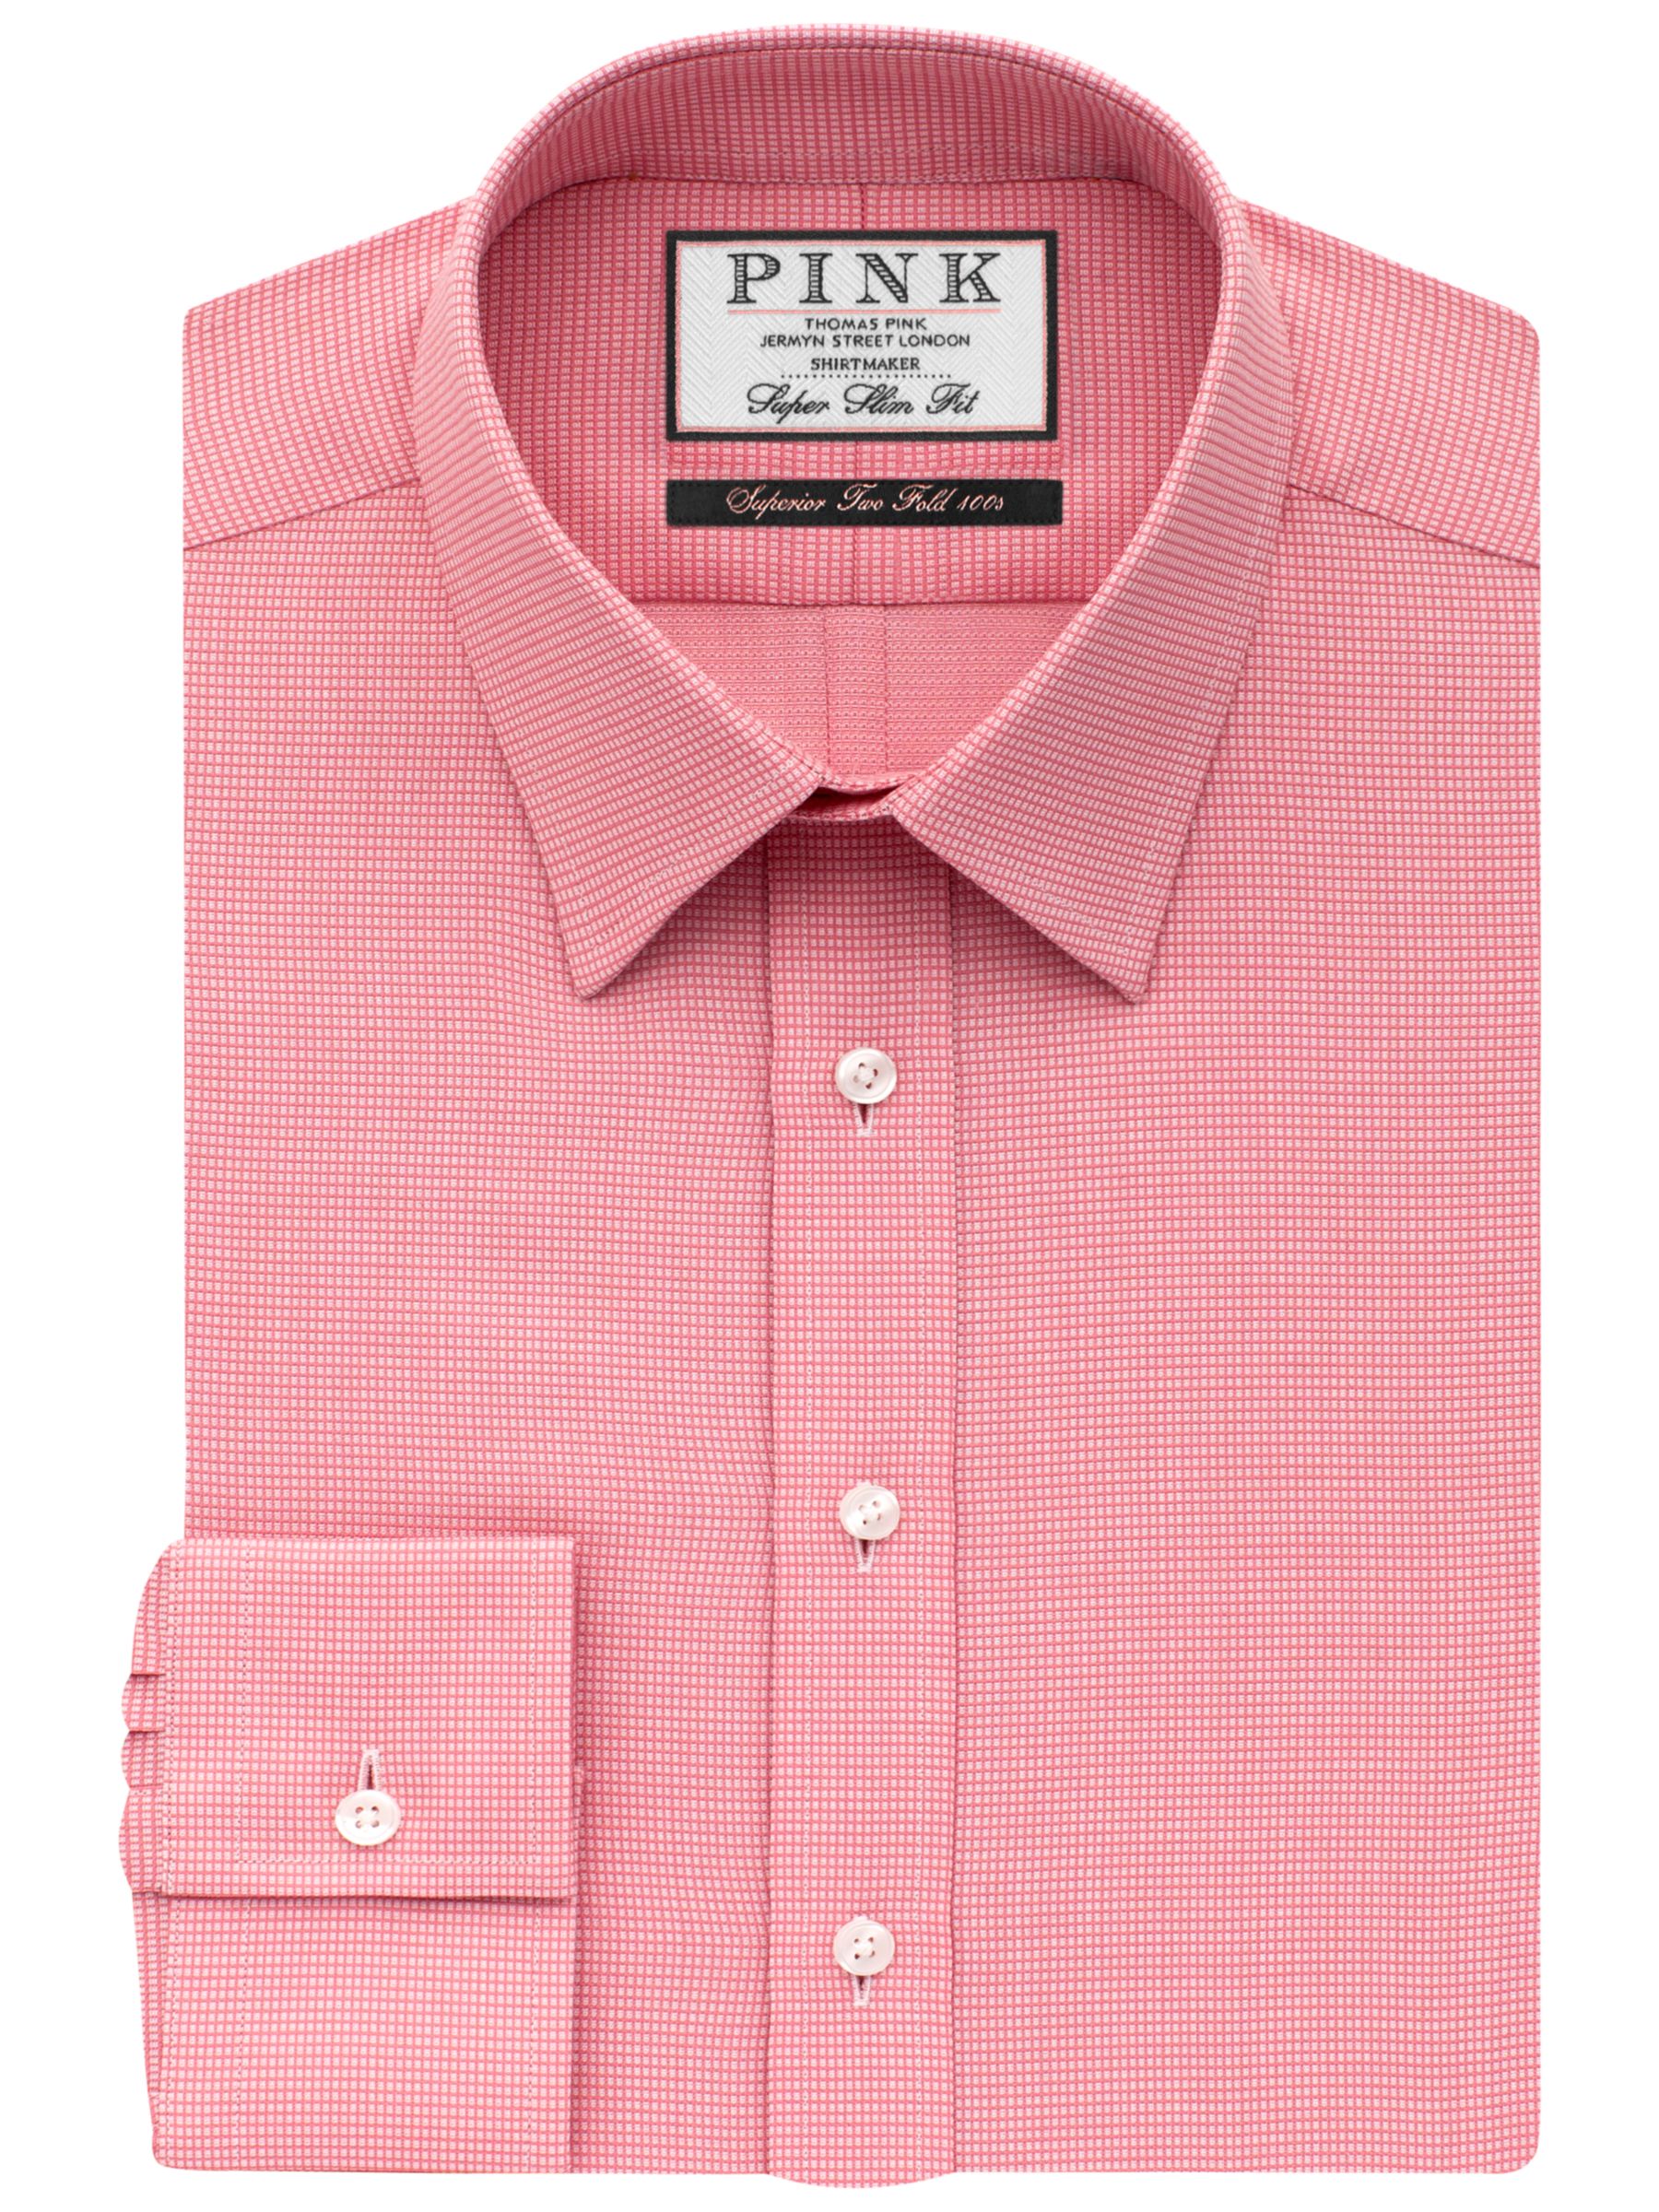 Thomas Pink Hartley Textured Super Slim Fit Shirt, Pink/White, 14.5